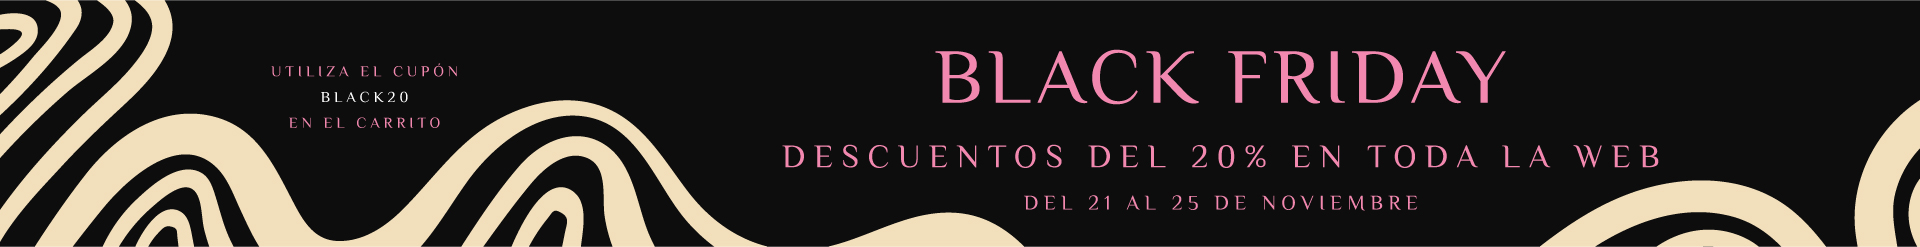 Banner Web BLACK FRIDAY-Cupon BLACK20